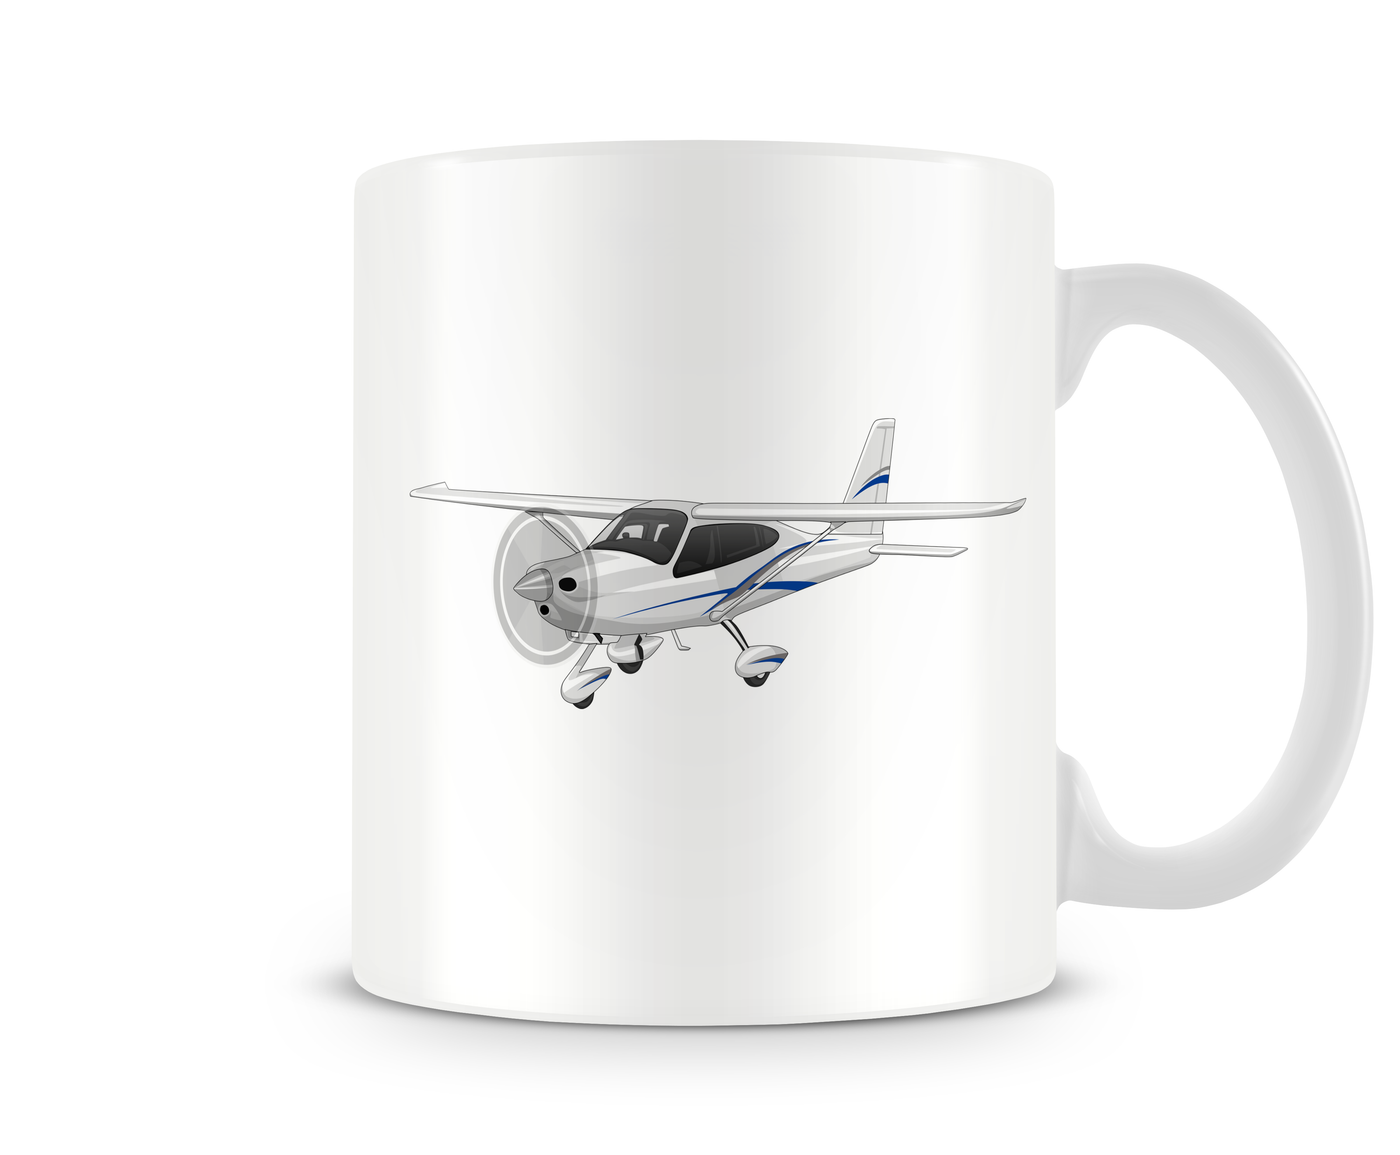 Tecnam P2010 Mug - Aircraft Mugs